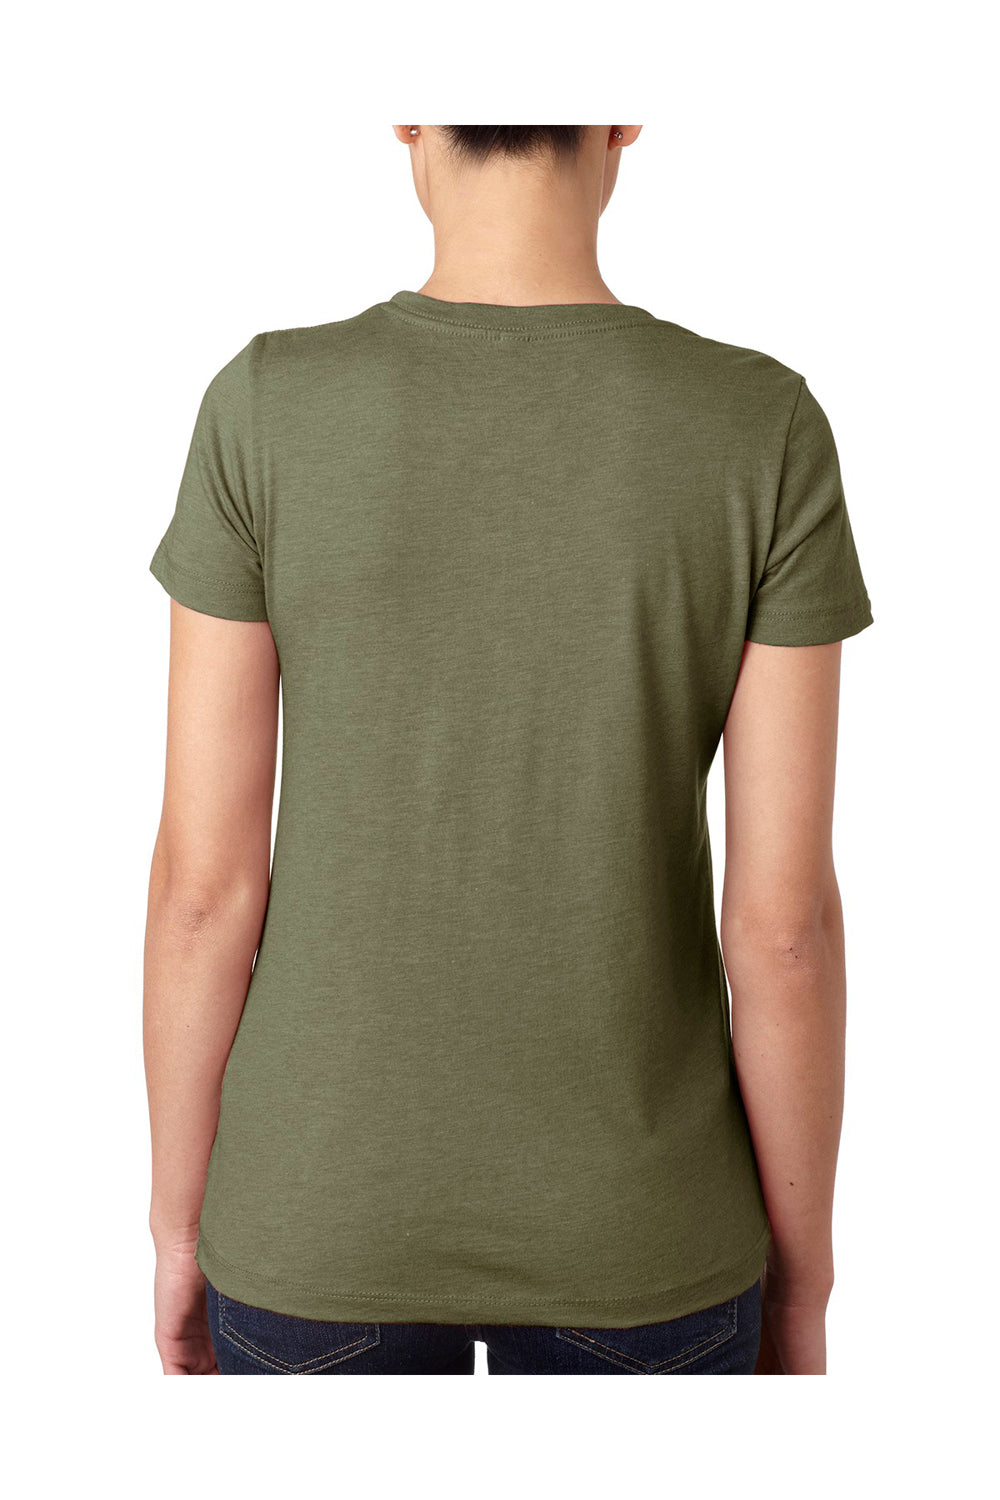 Next Level 6710 Womens Jersey Short Sleeve Crewneck T-Shirt Military Green Back